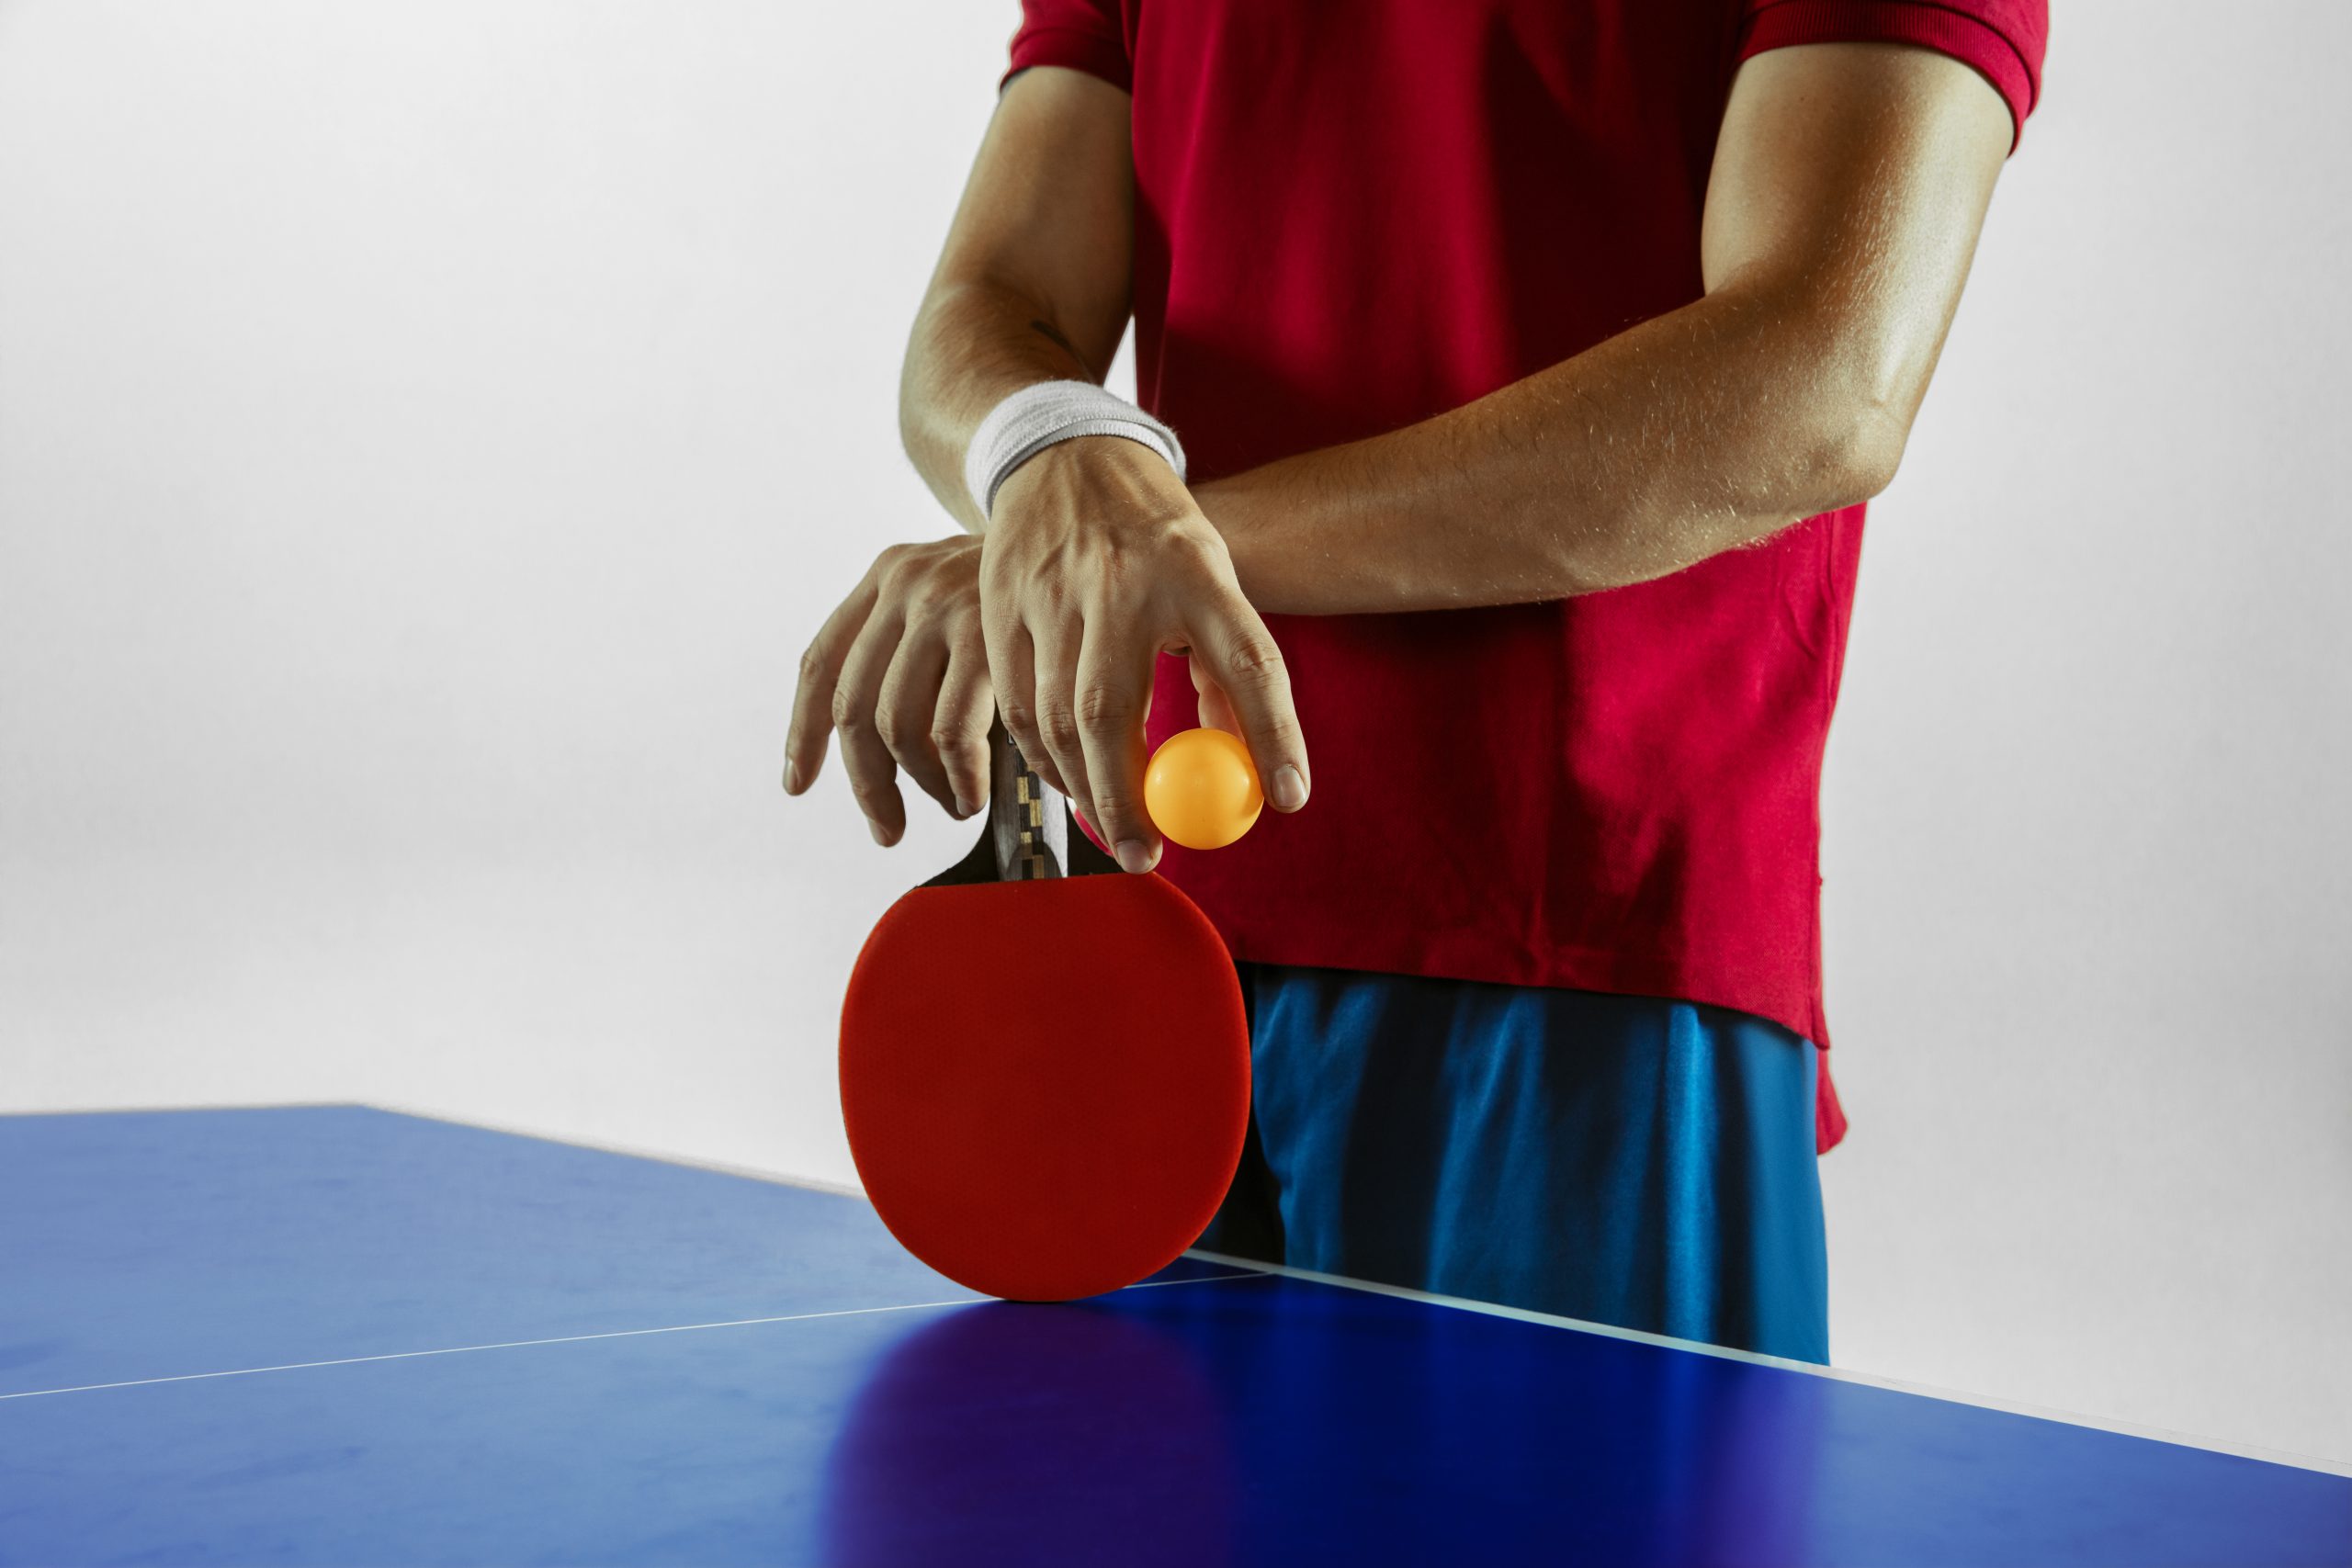 Table tennis a good alternative during coronavirus pandemic